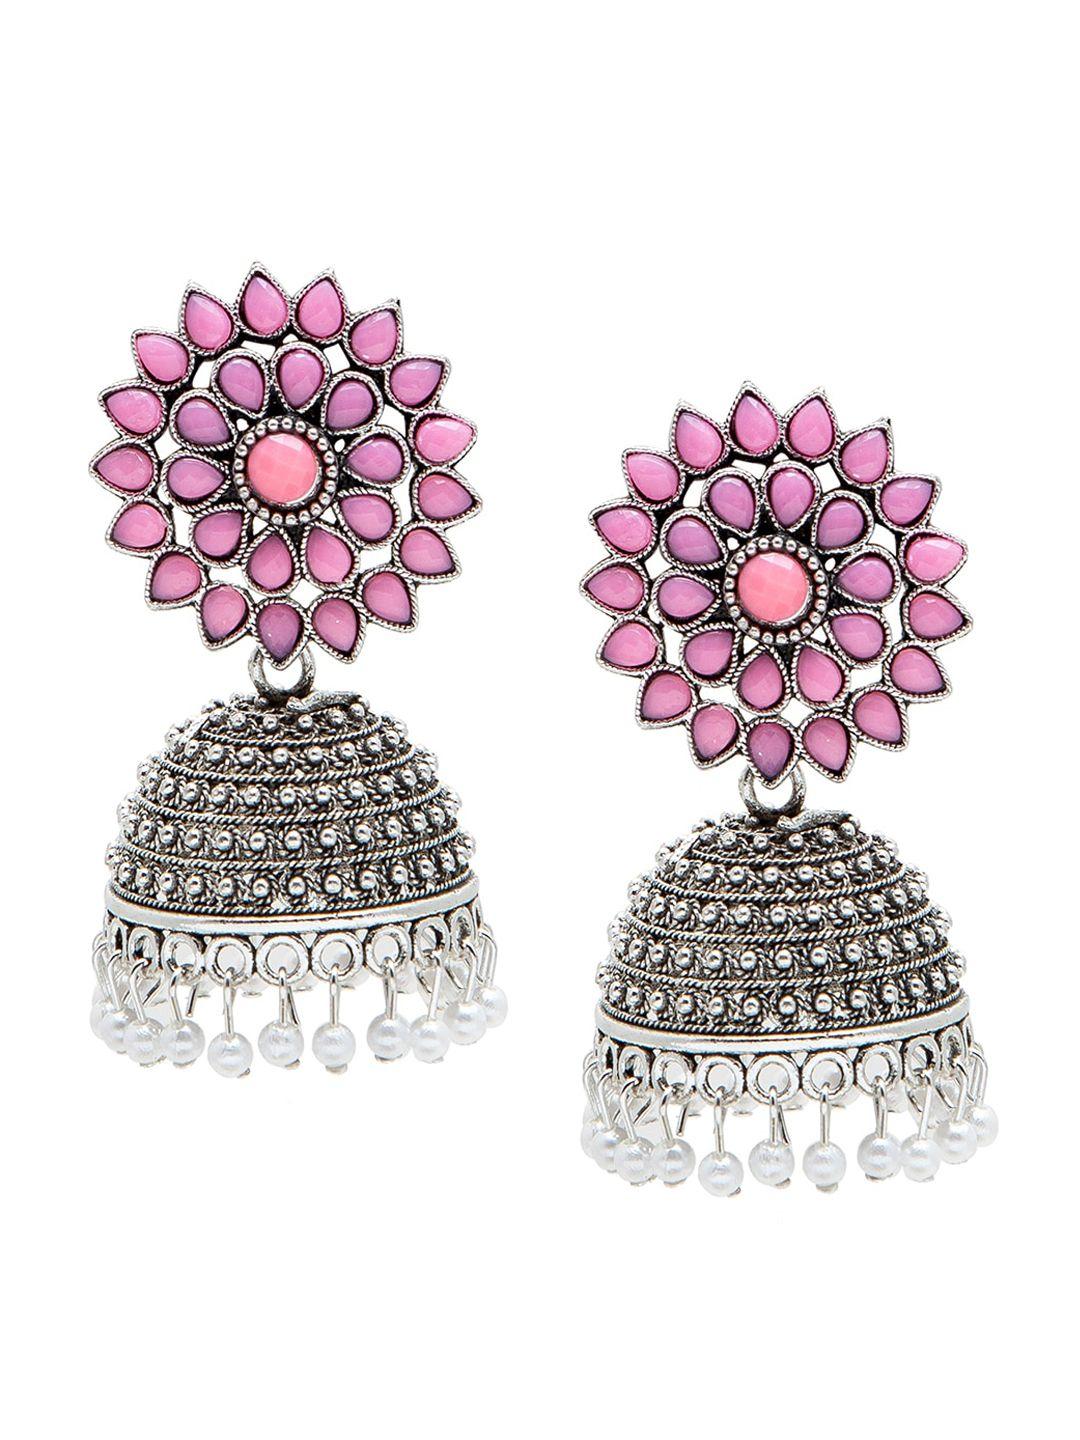 shining jewel - by shivansh pink oxidised ethnic jhumka with cz & pearls earrings